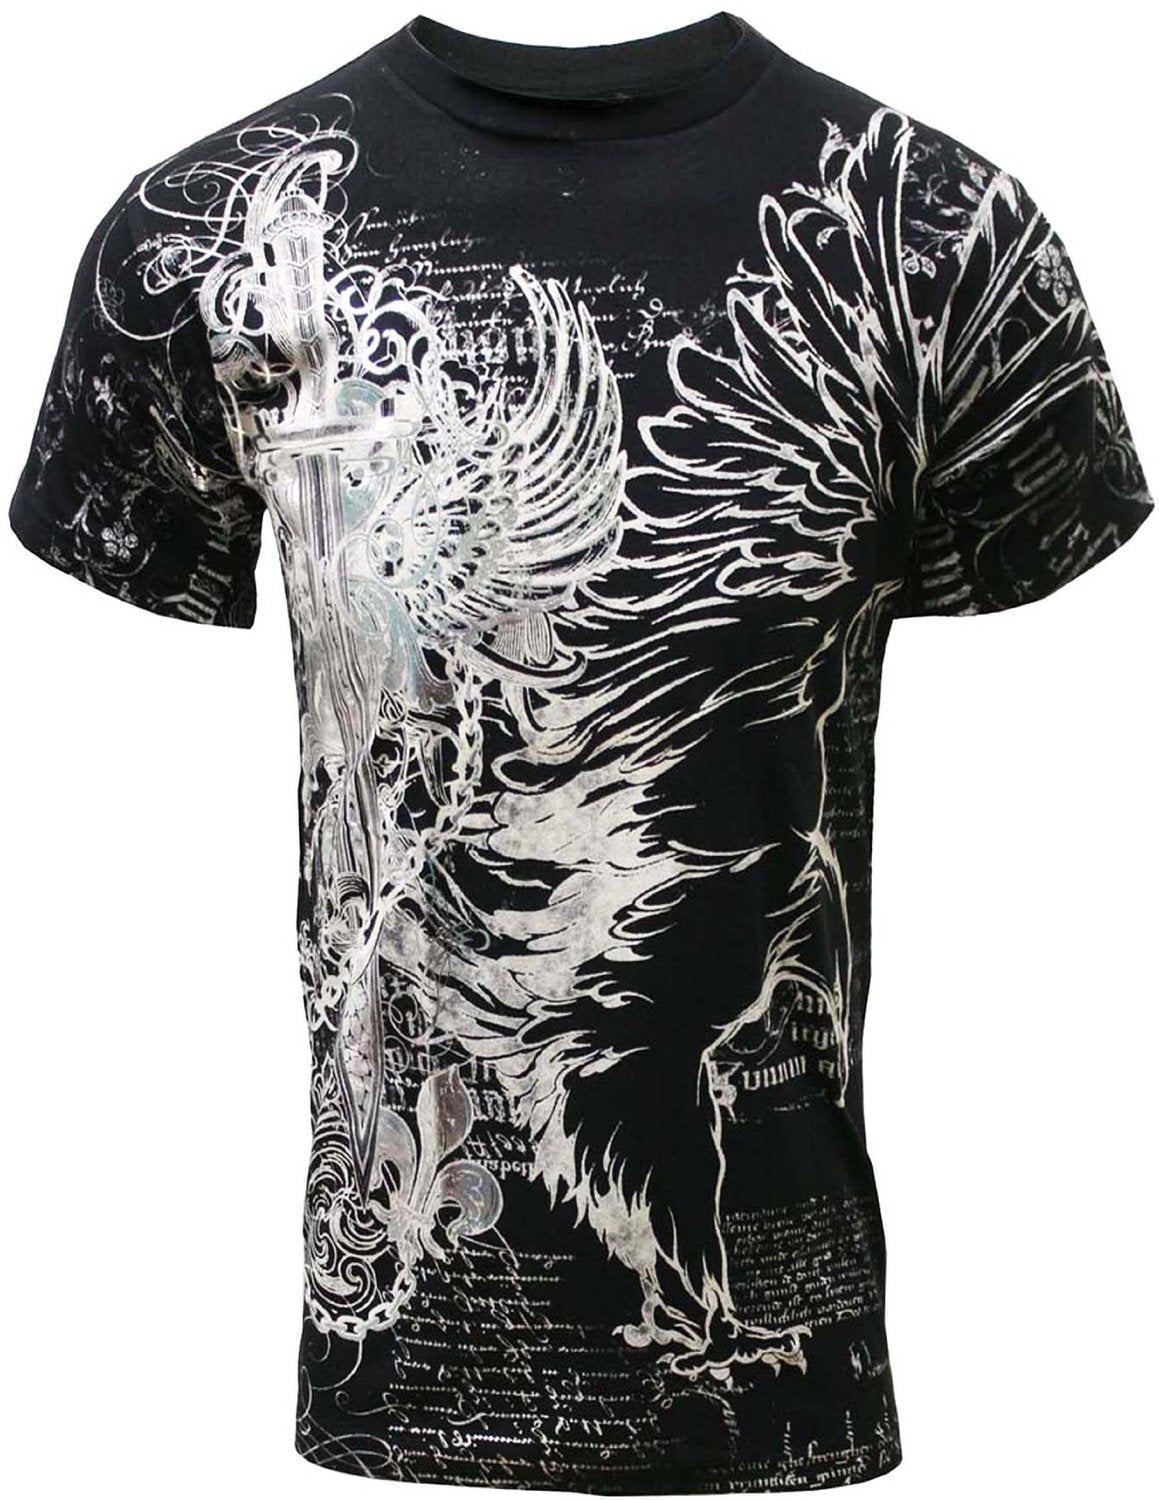 Konflic Winged Sword T-shirt (Black)